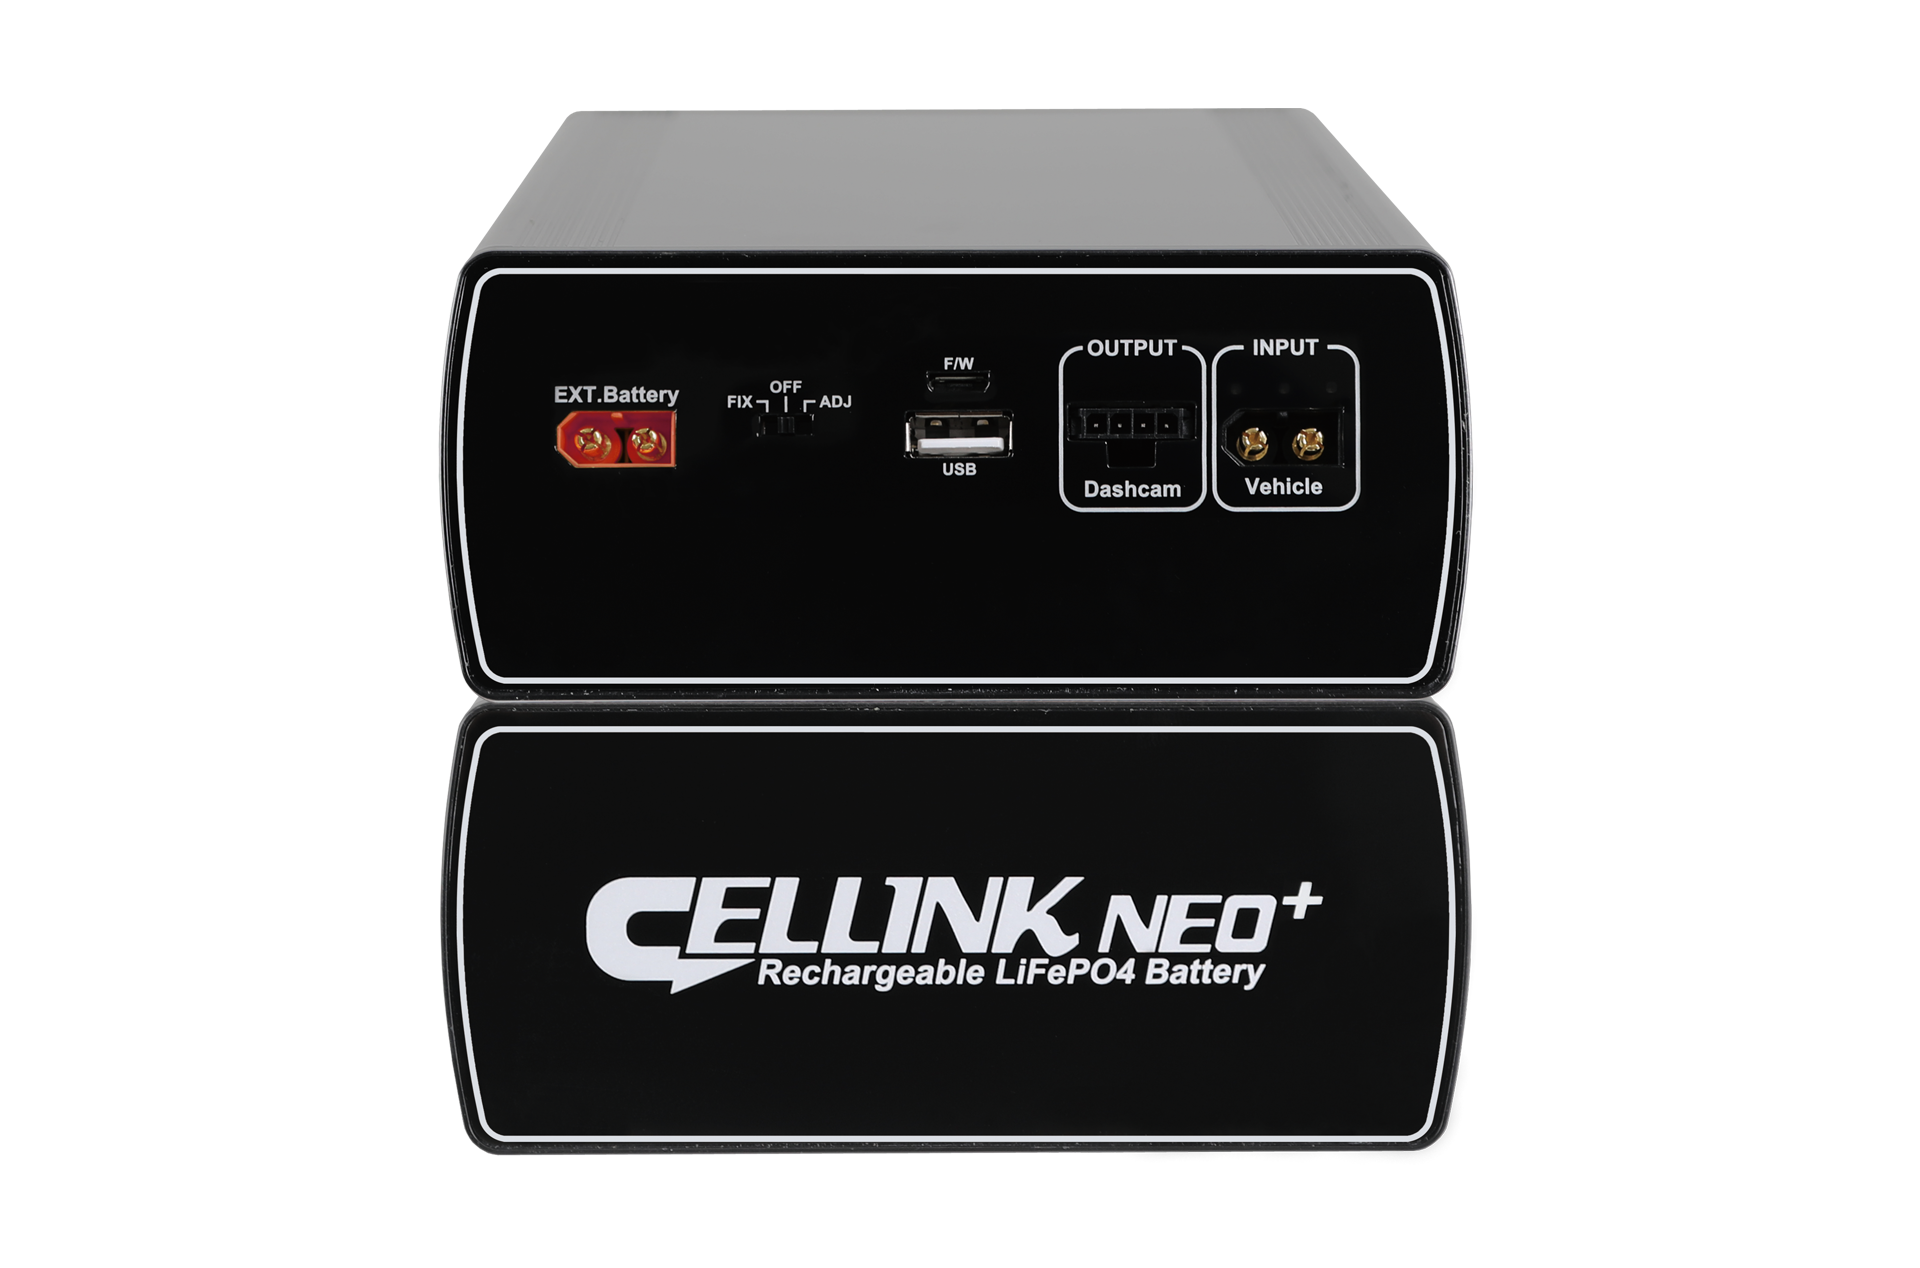 dash cam battery Cellink Neo21+